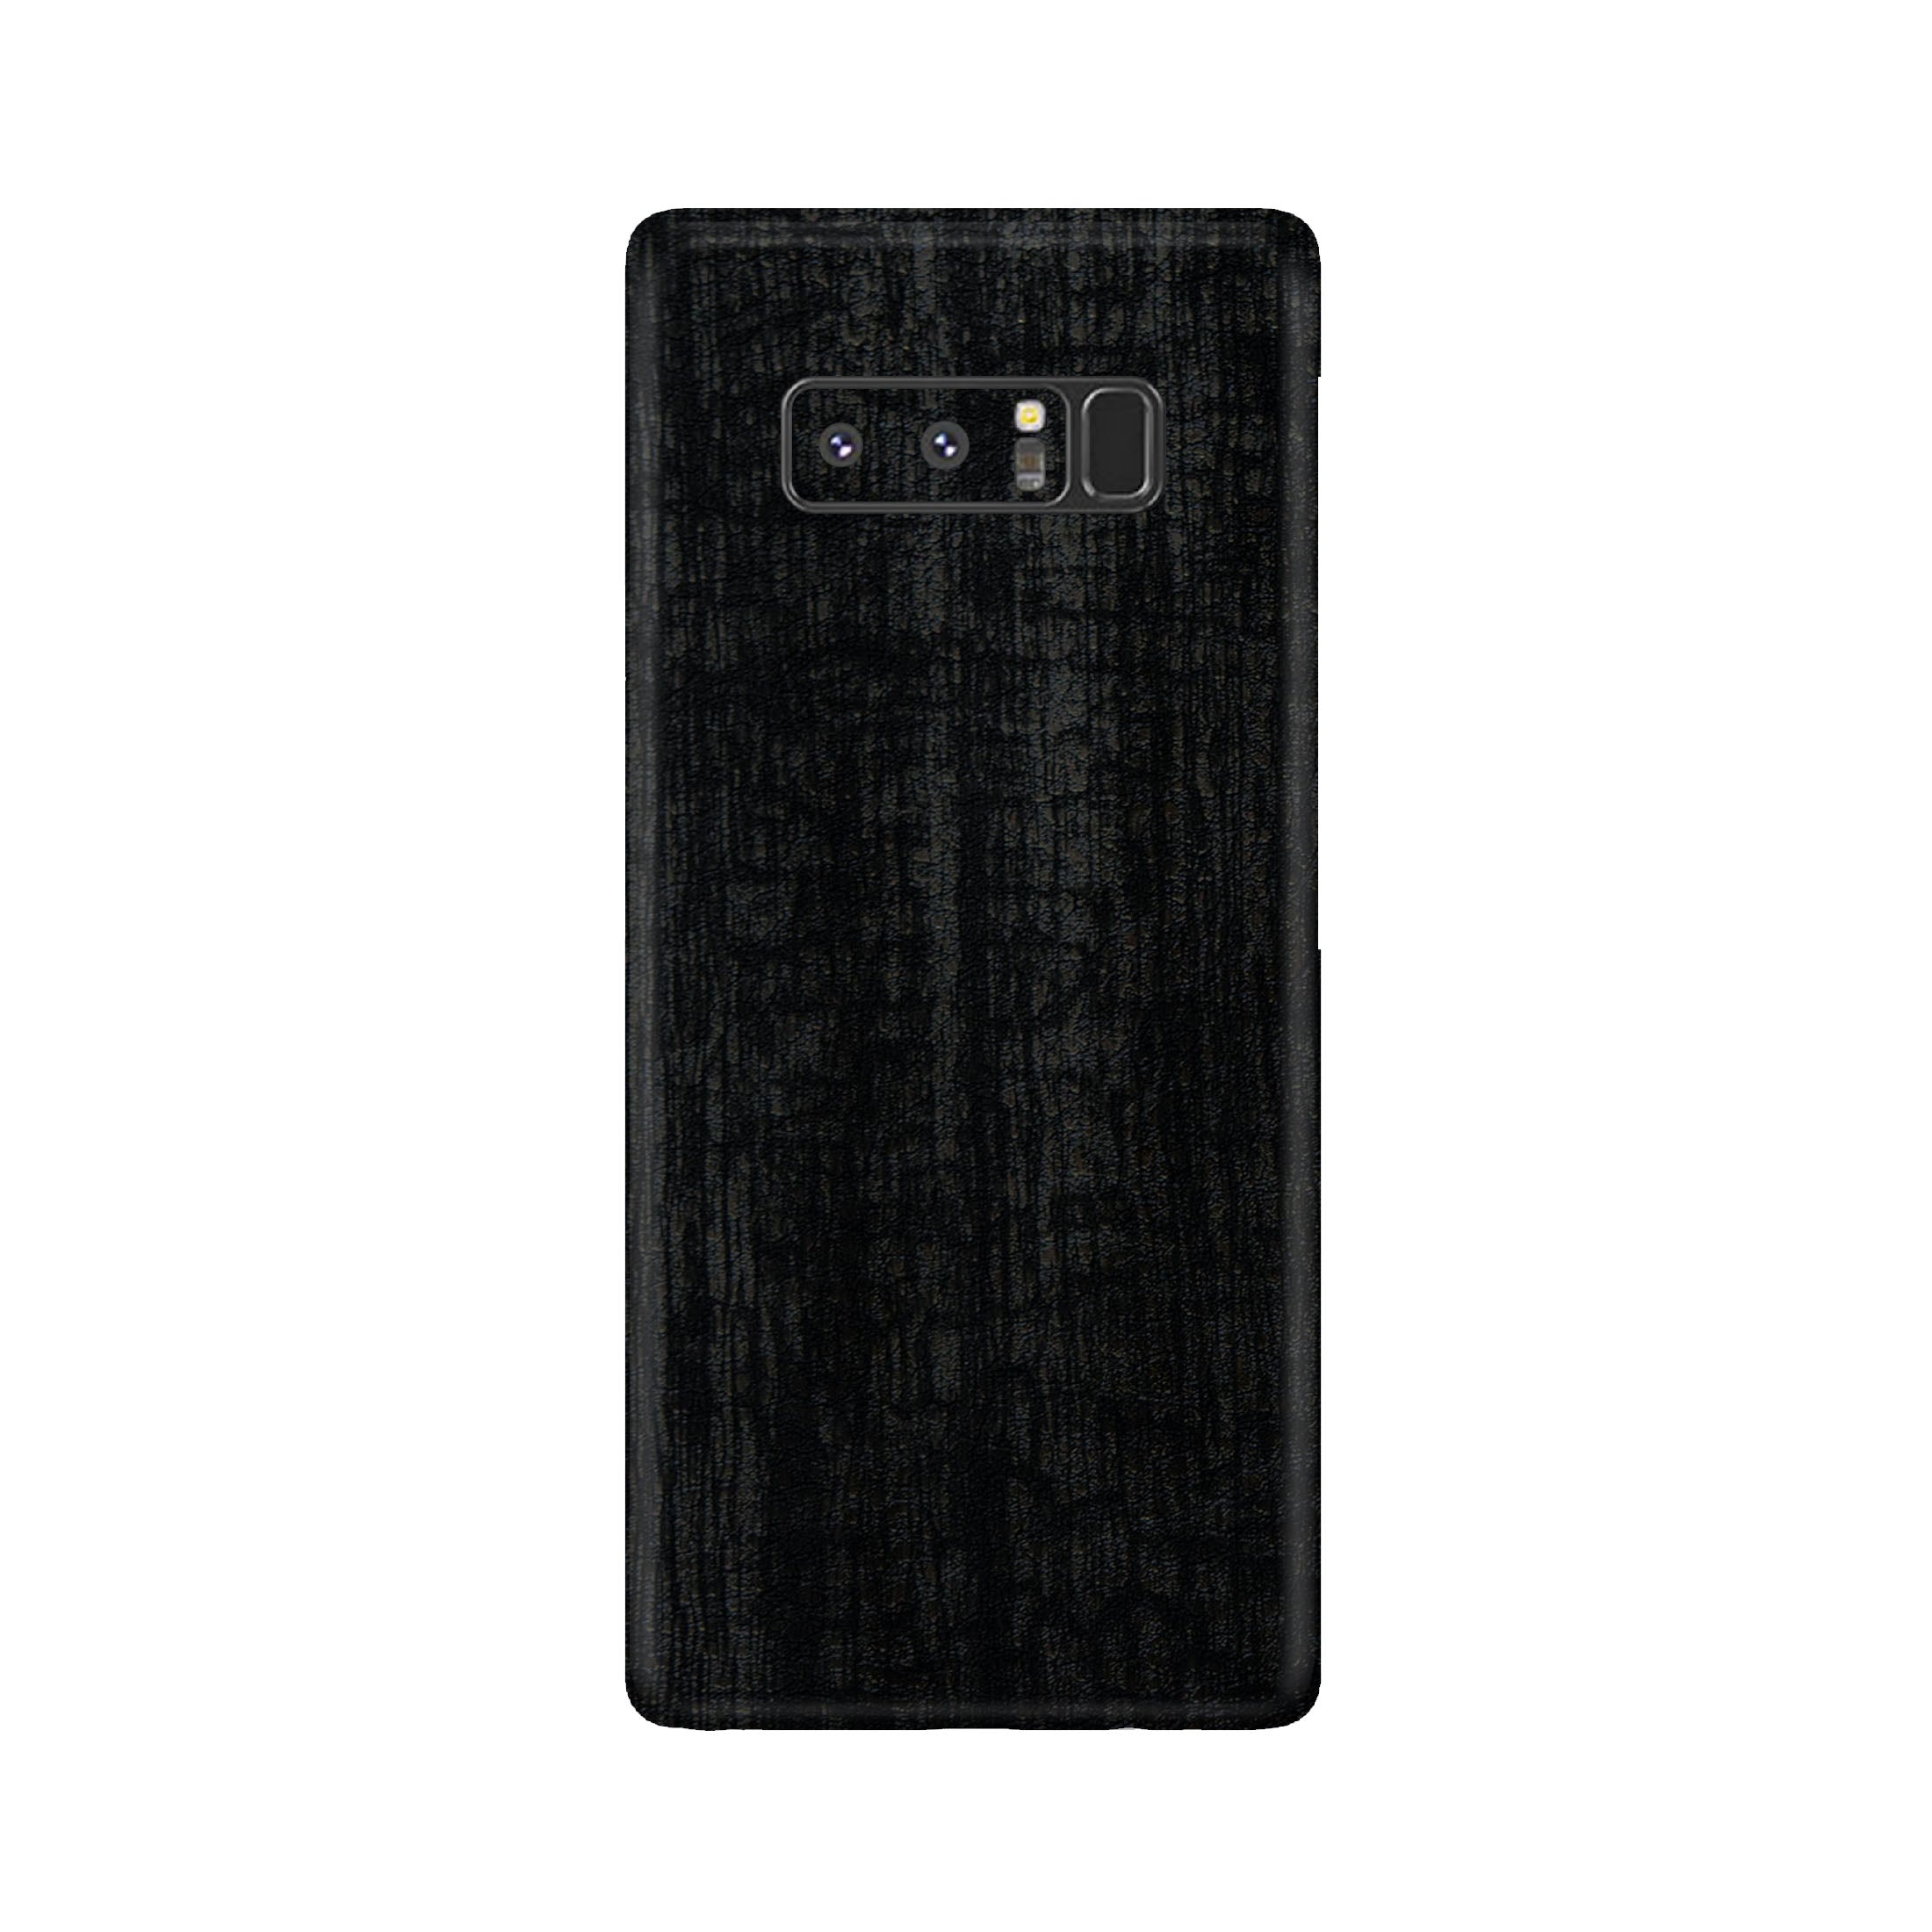 Dragon Black Skin for Samsung Note 8